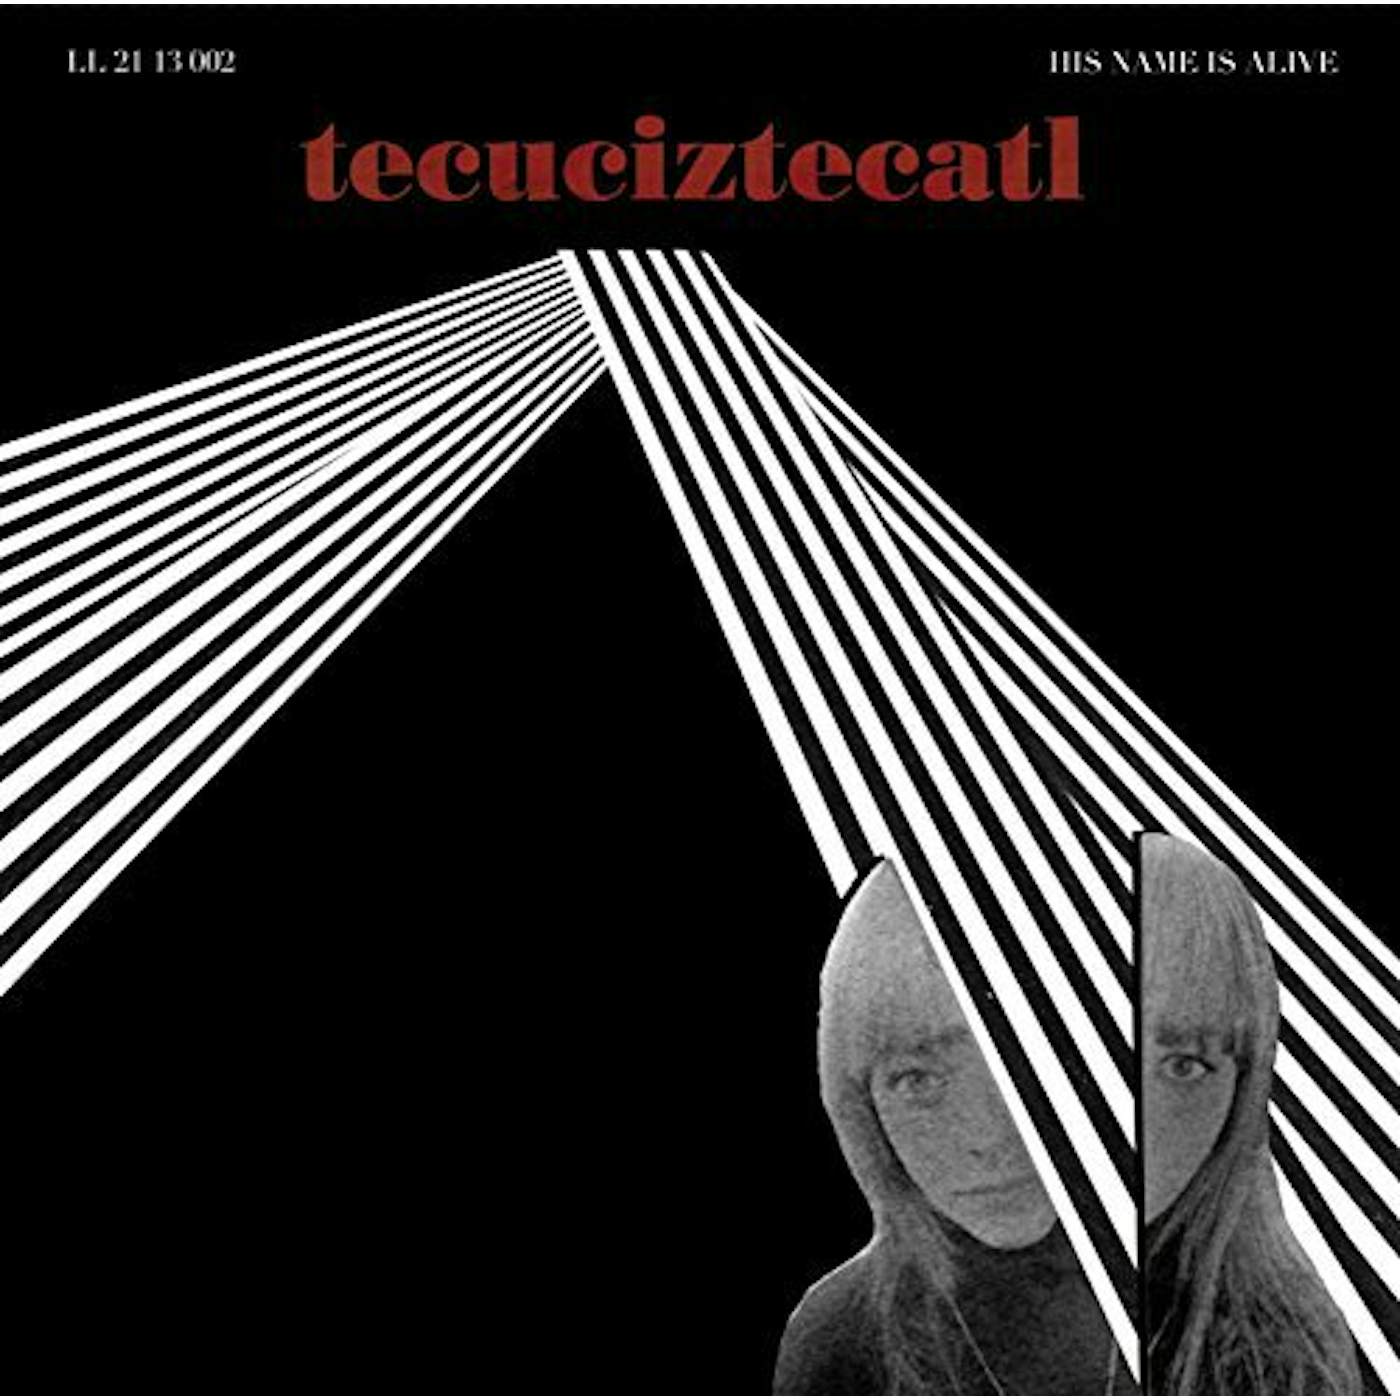 His Name Is Alive TEUCIZTECATL Vinyl Record